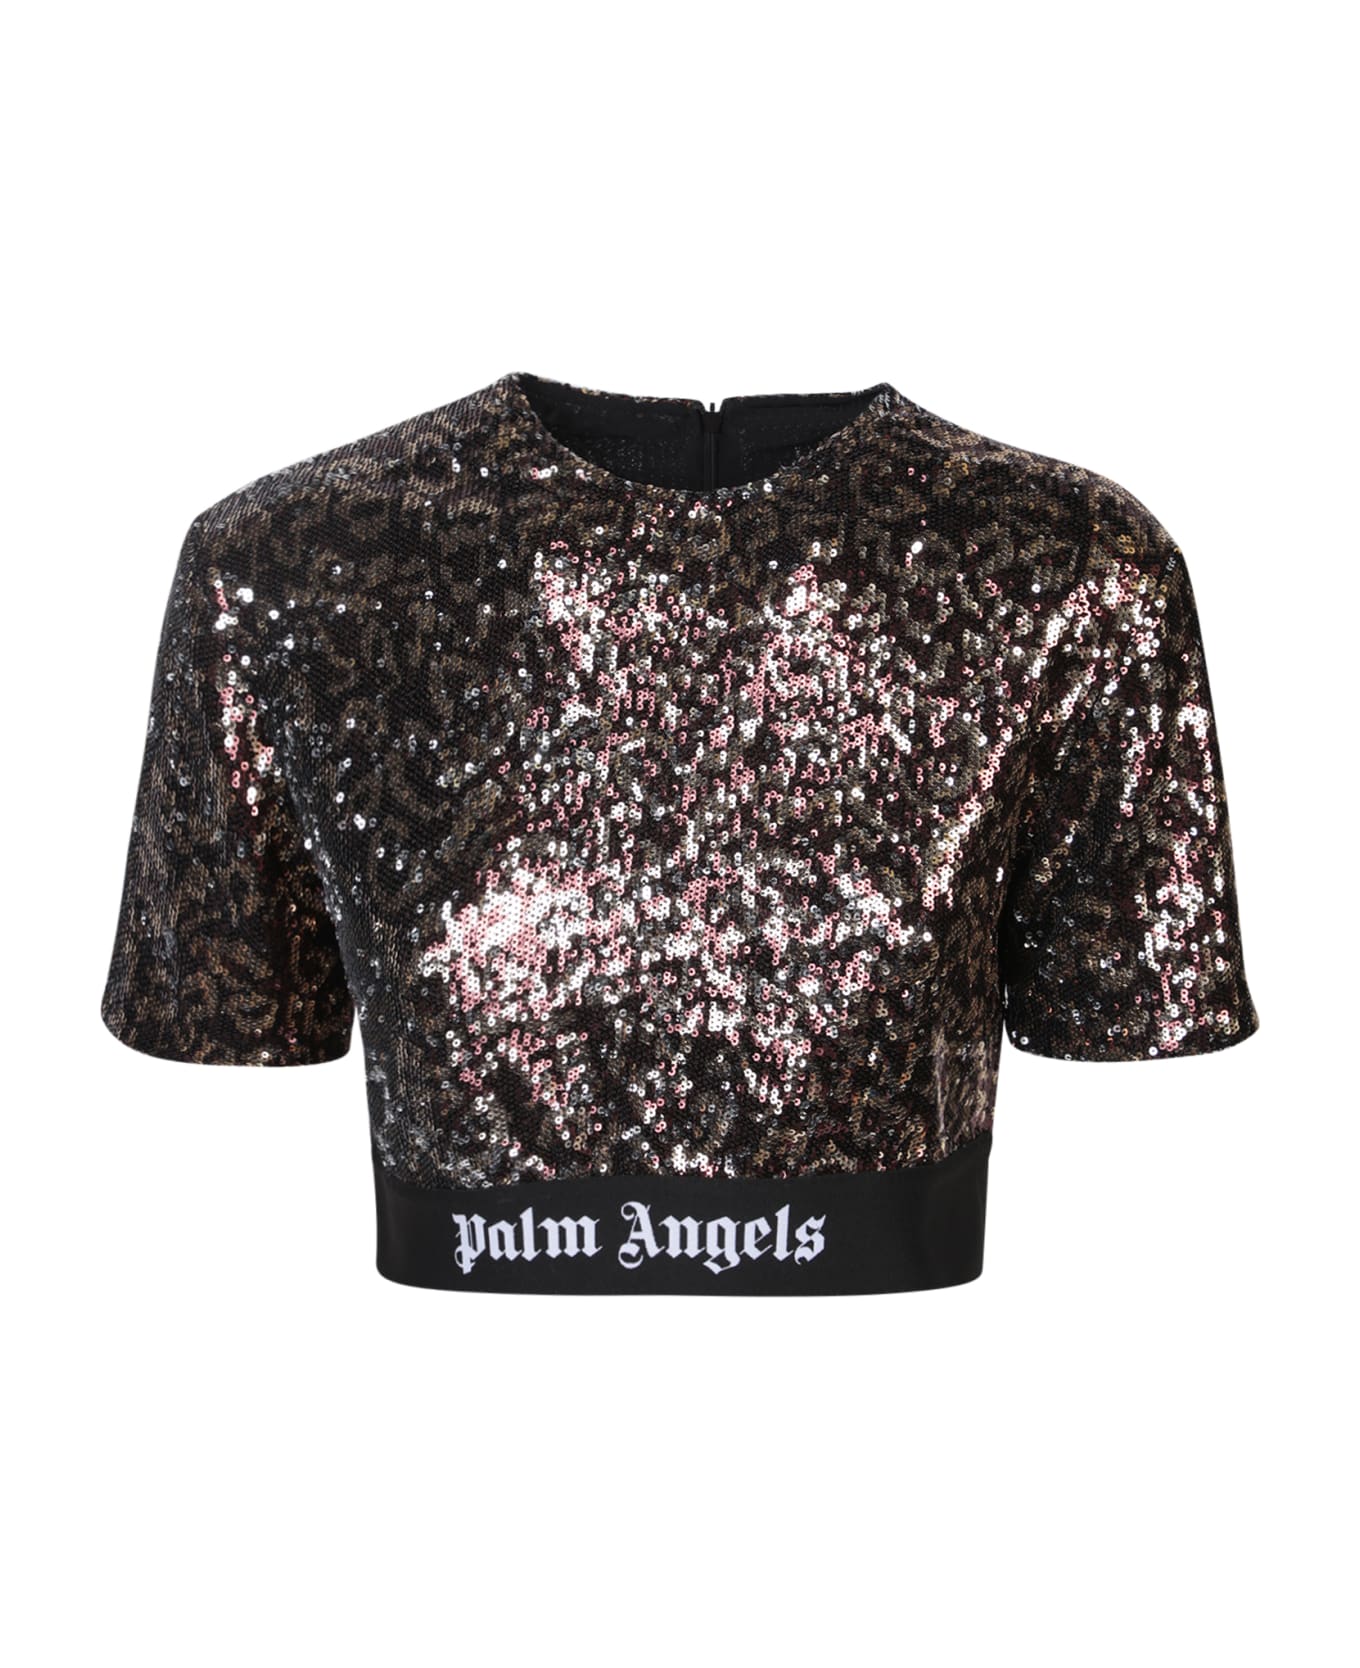 Palm Angels Sequin Embellished Cropped Top - Brown Black